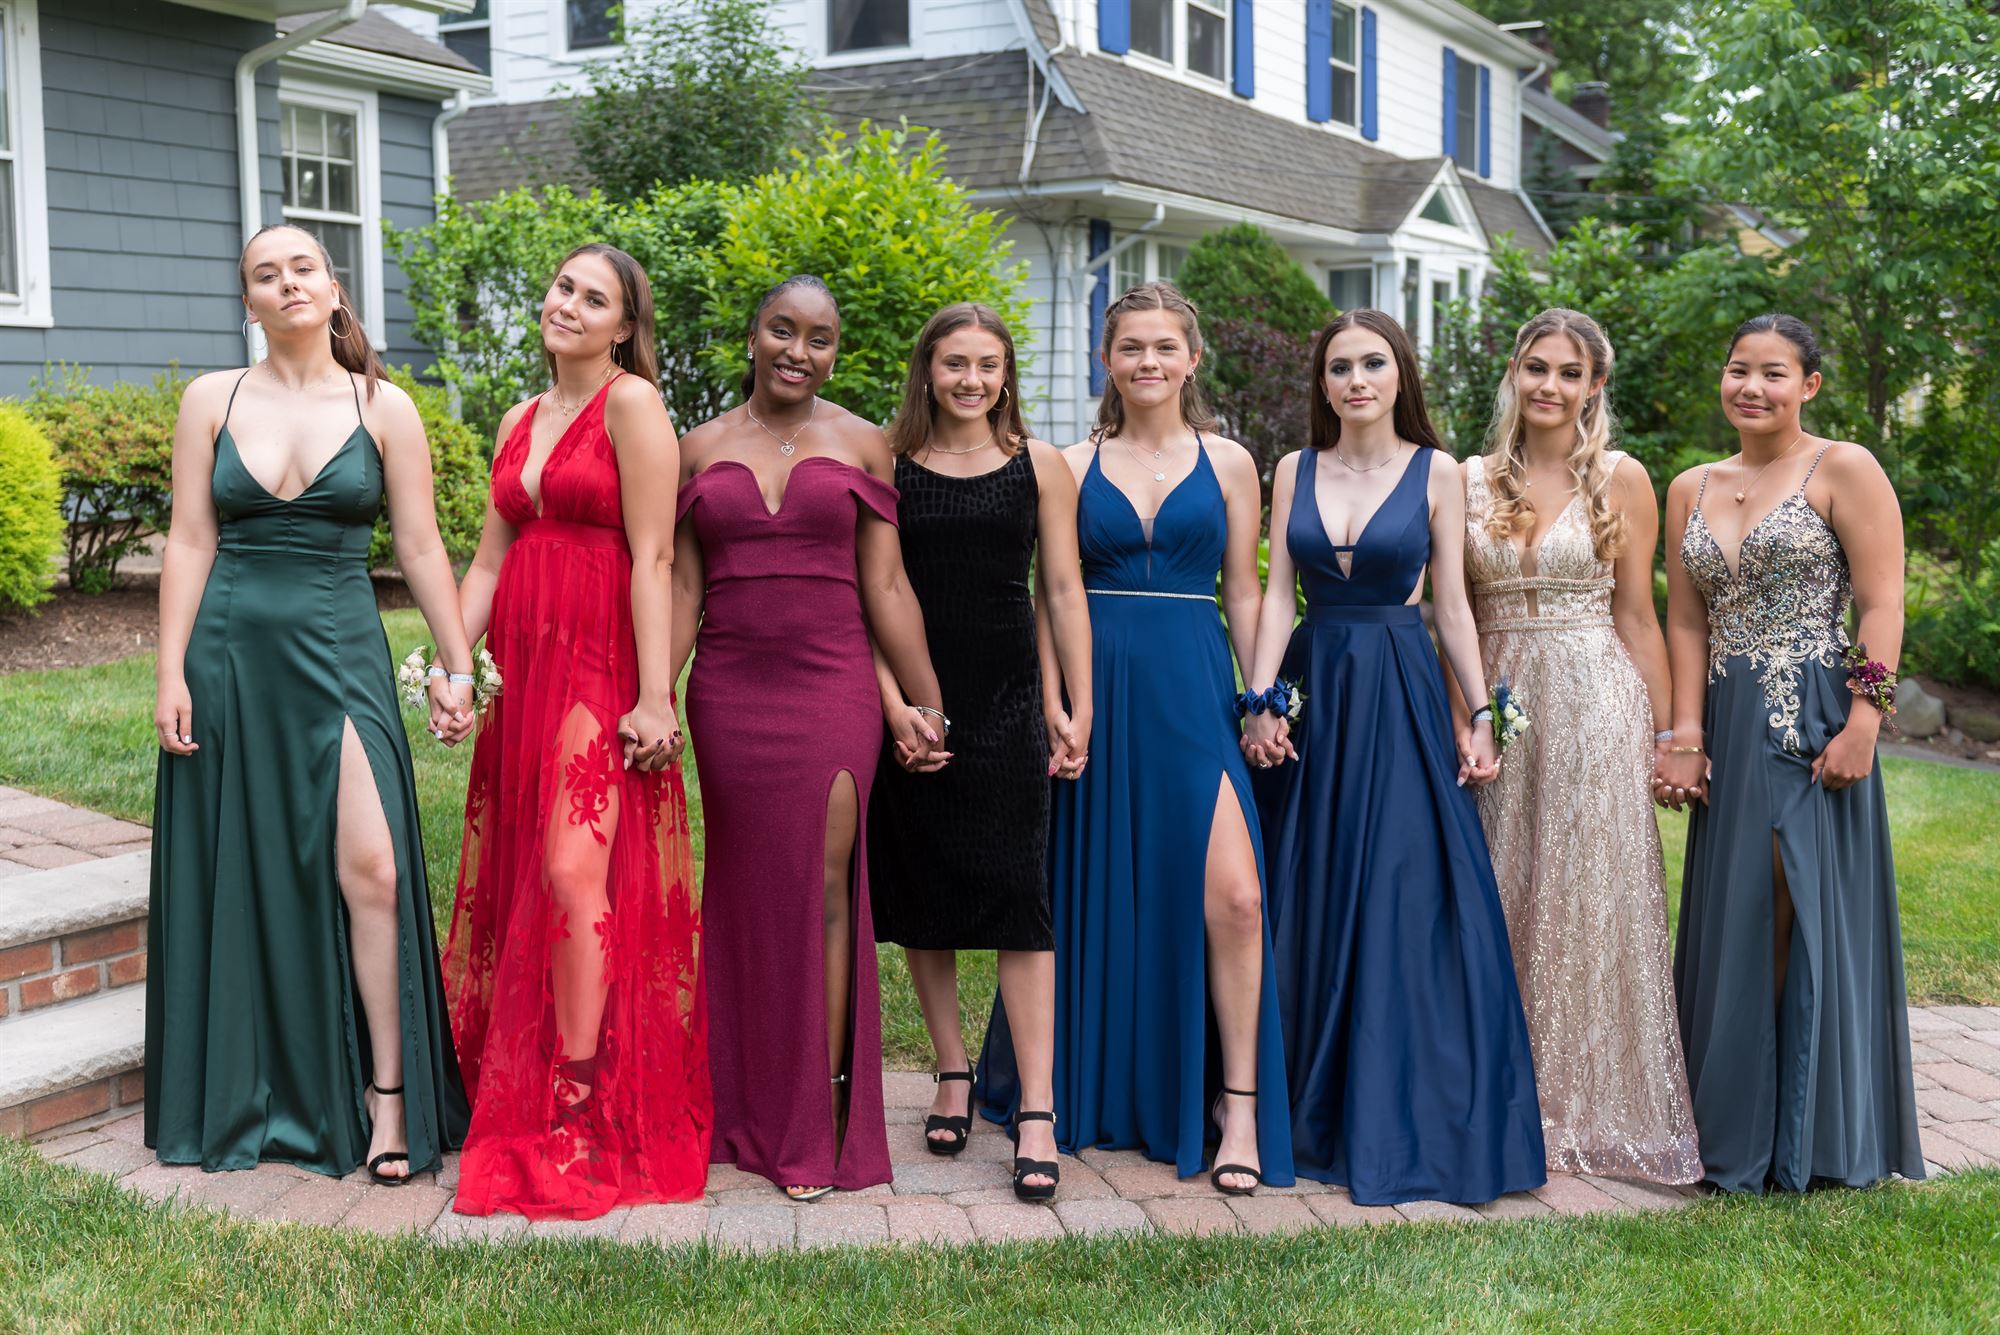 PHOTOS: Columbia High School Prom 2019 - The Village Green.